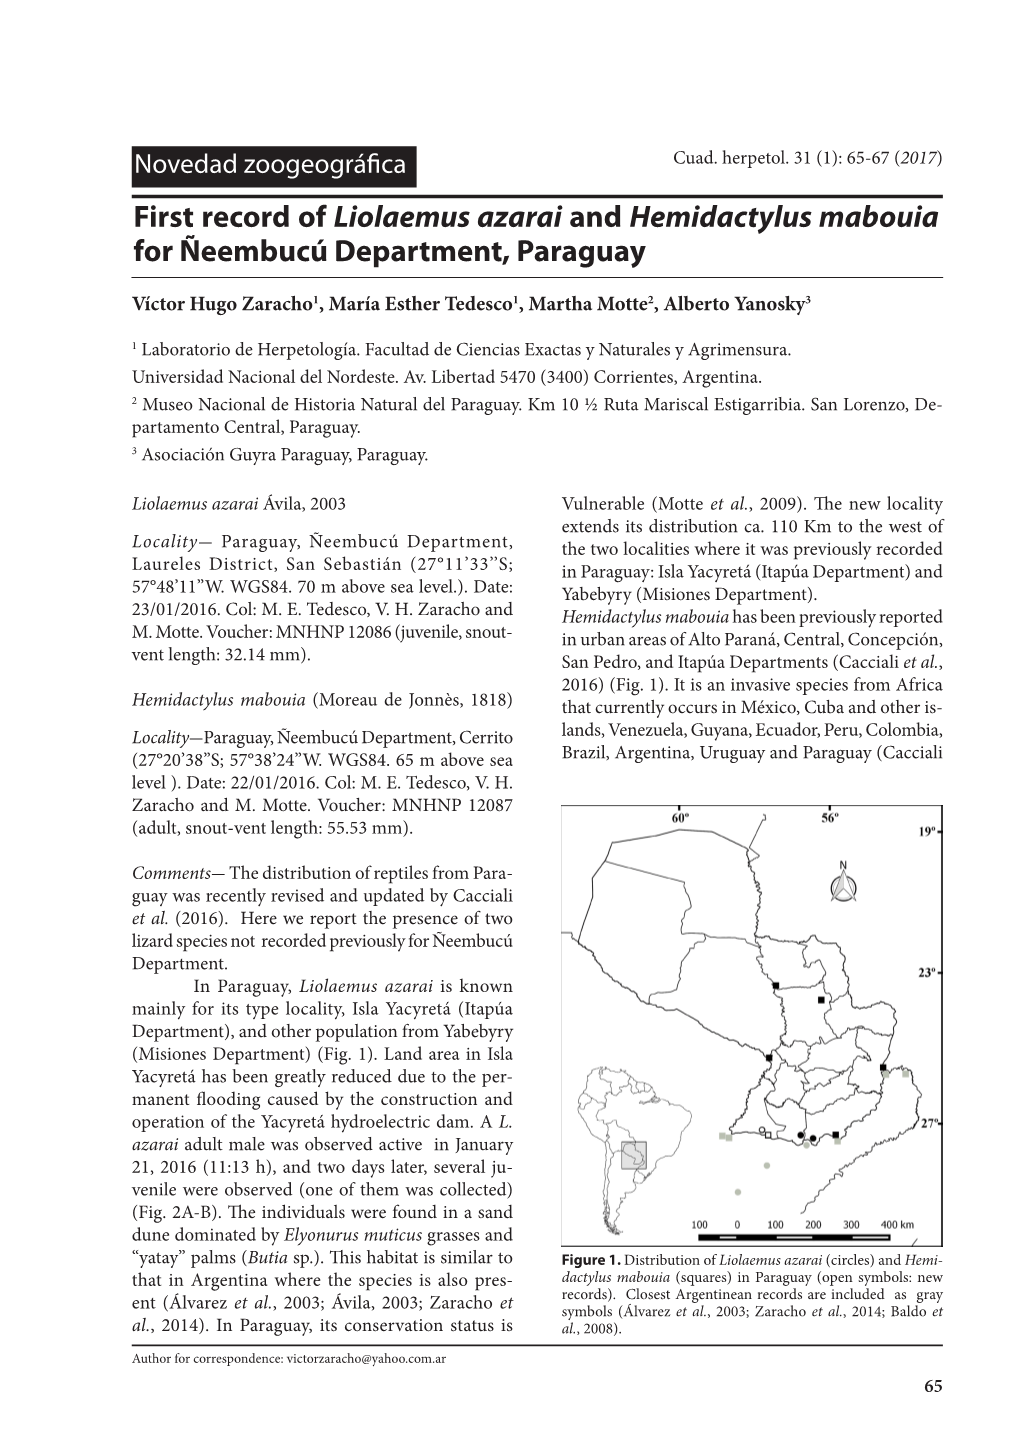 First Record of Liolaemus Azarai and Hemidactylus Mabouia for Ñeembucú Department, Paraguay